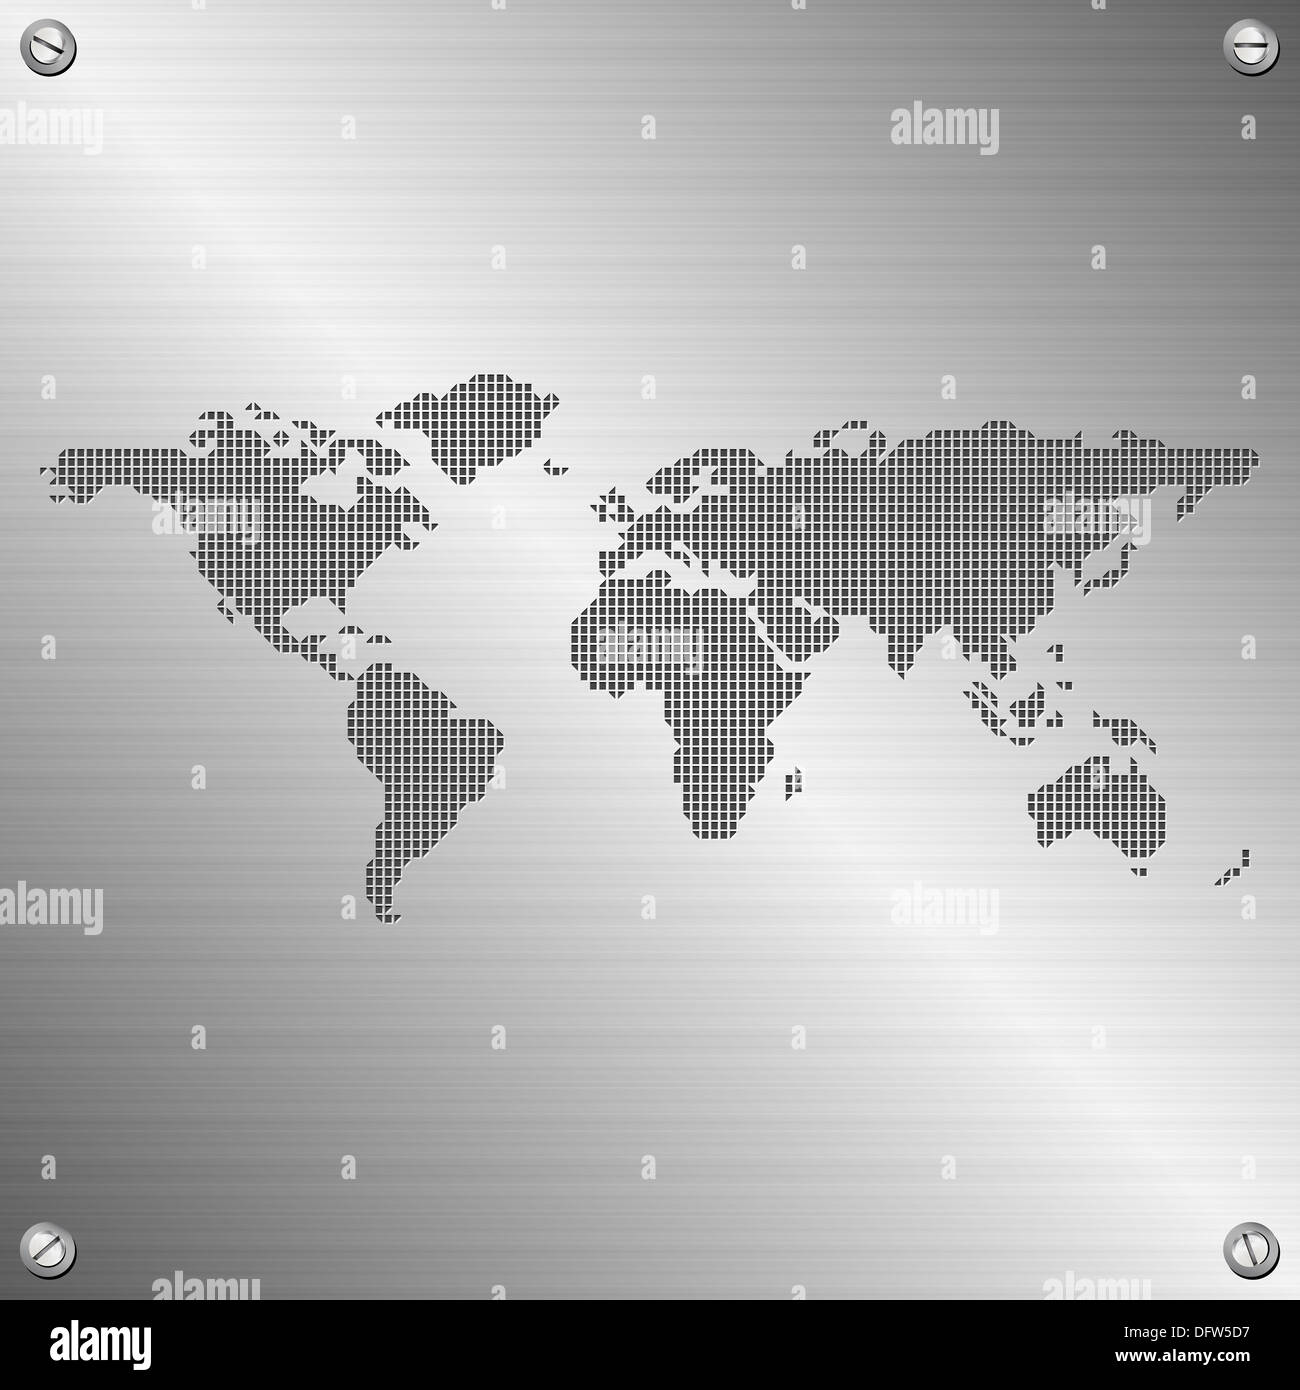 world map illustration on stainless steel background Stock Photo